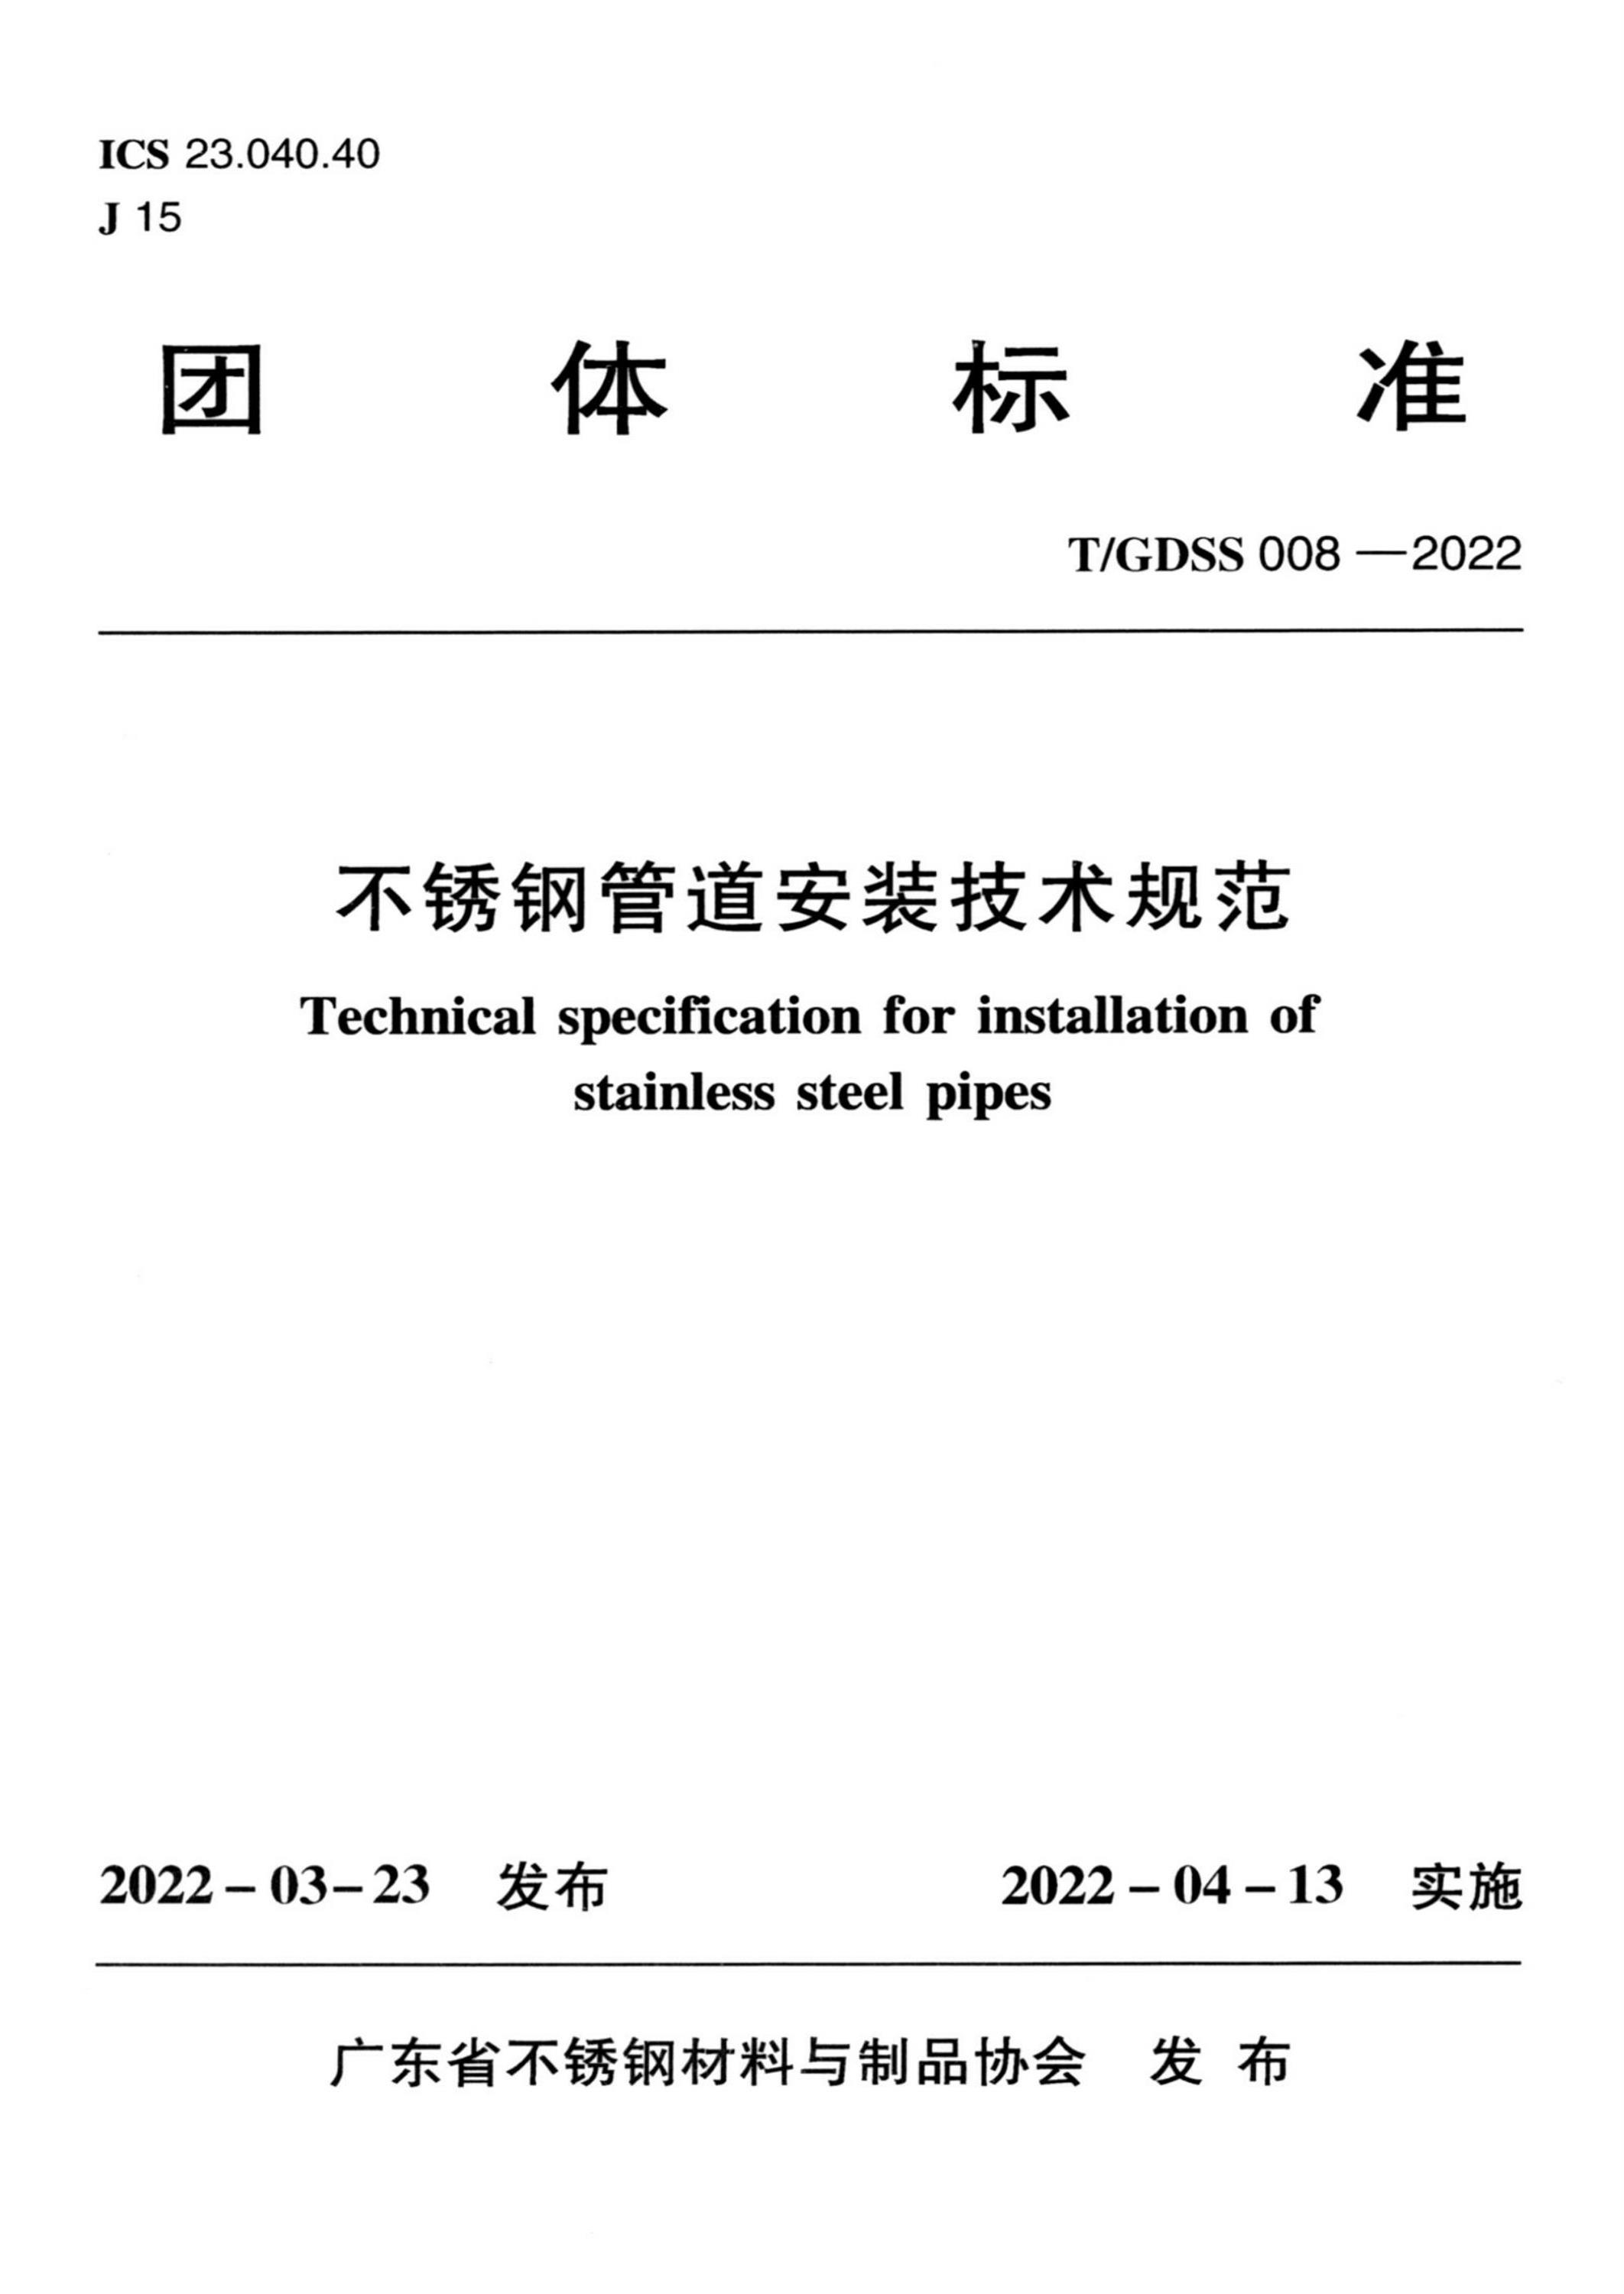 T/GDSS 008-2022 不锈钢管道安装技术规范